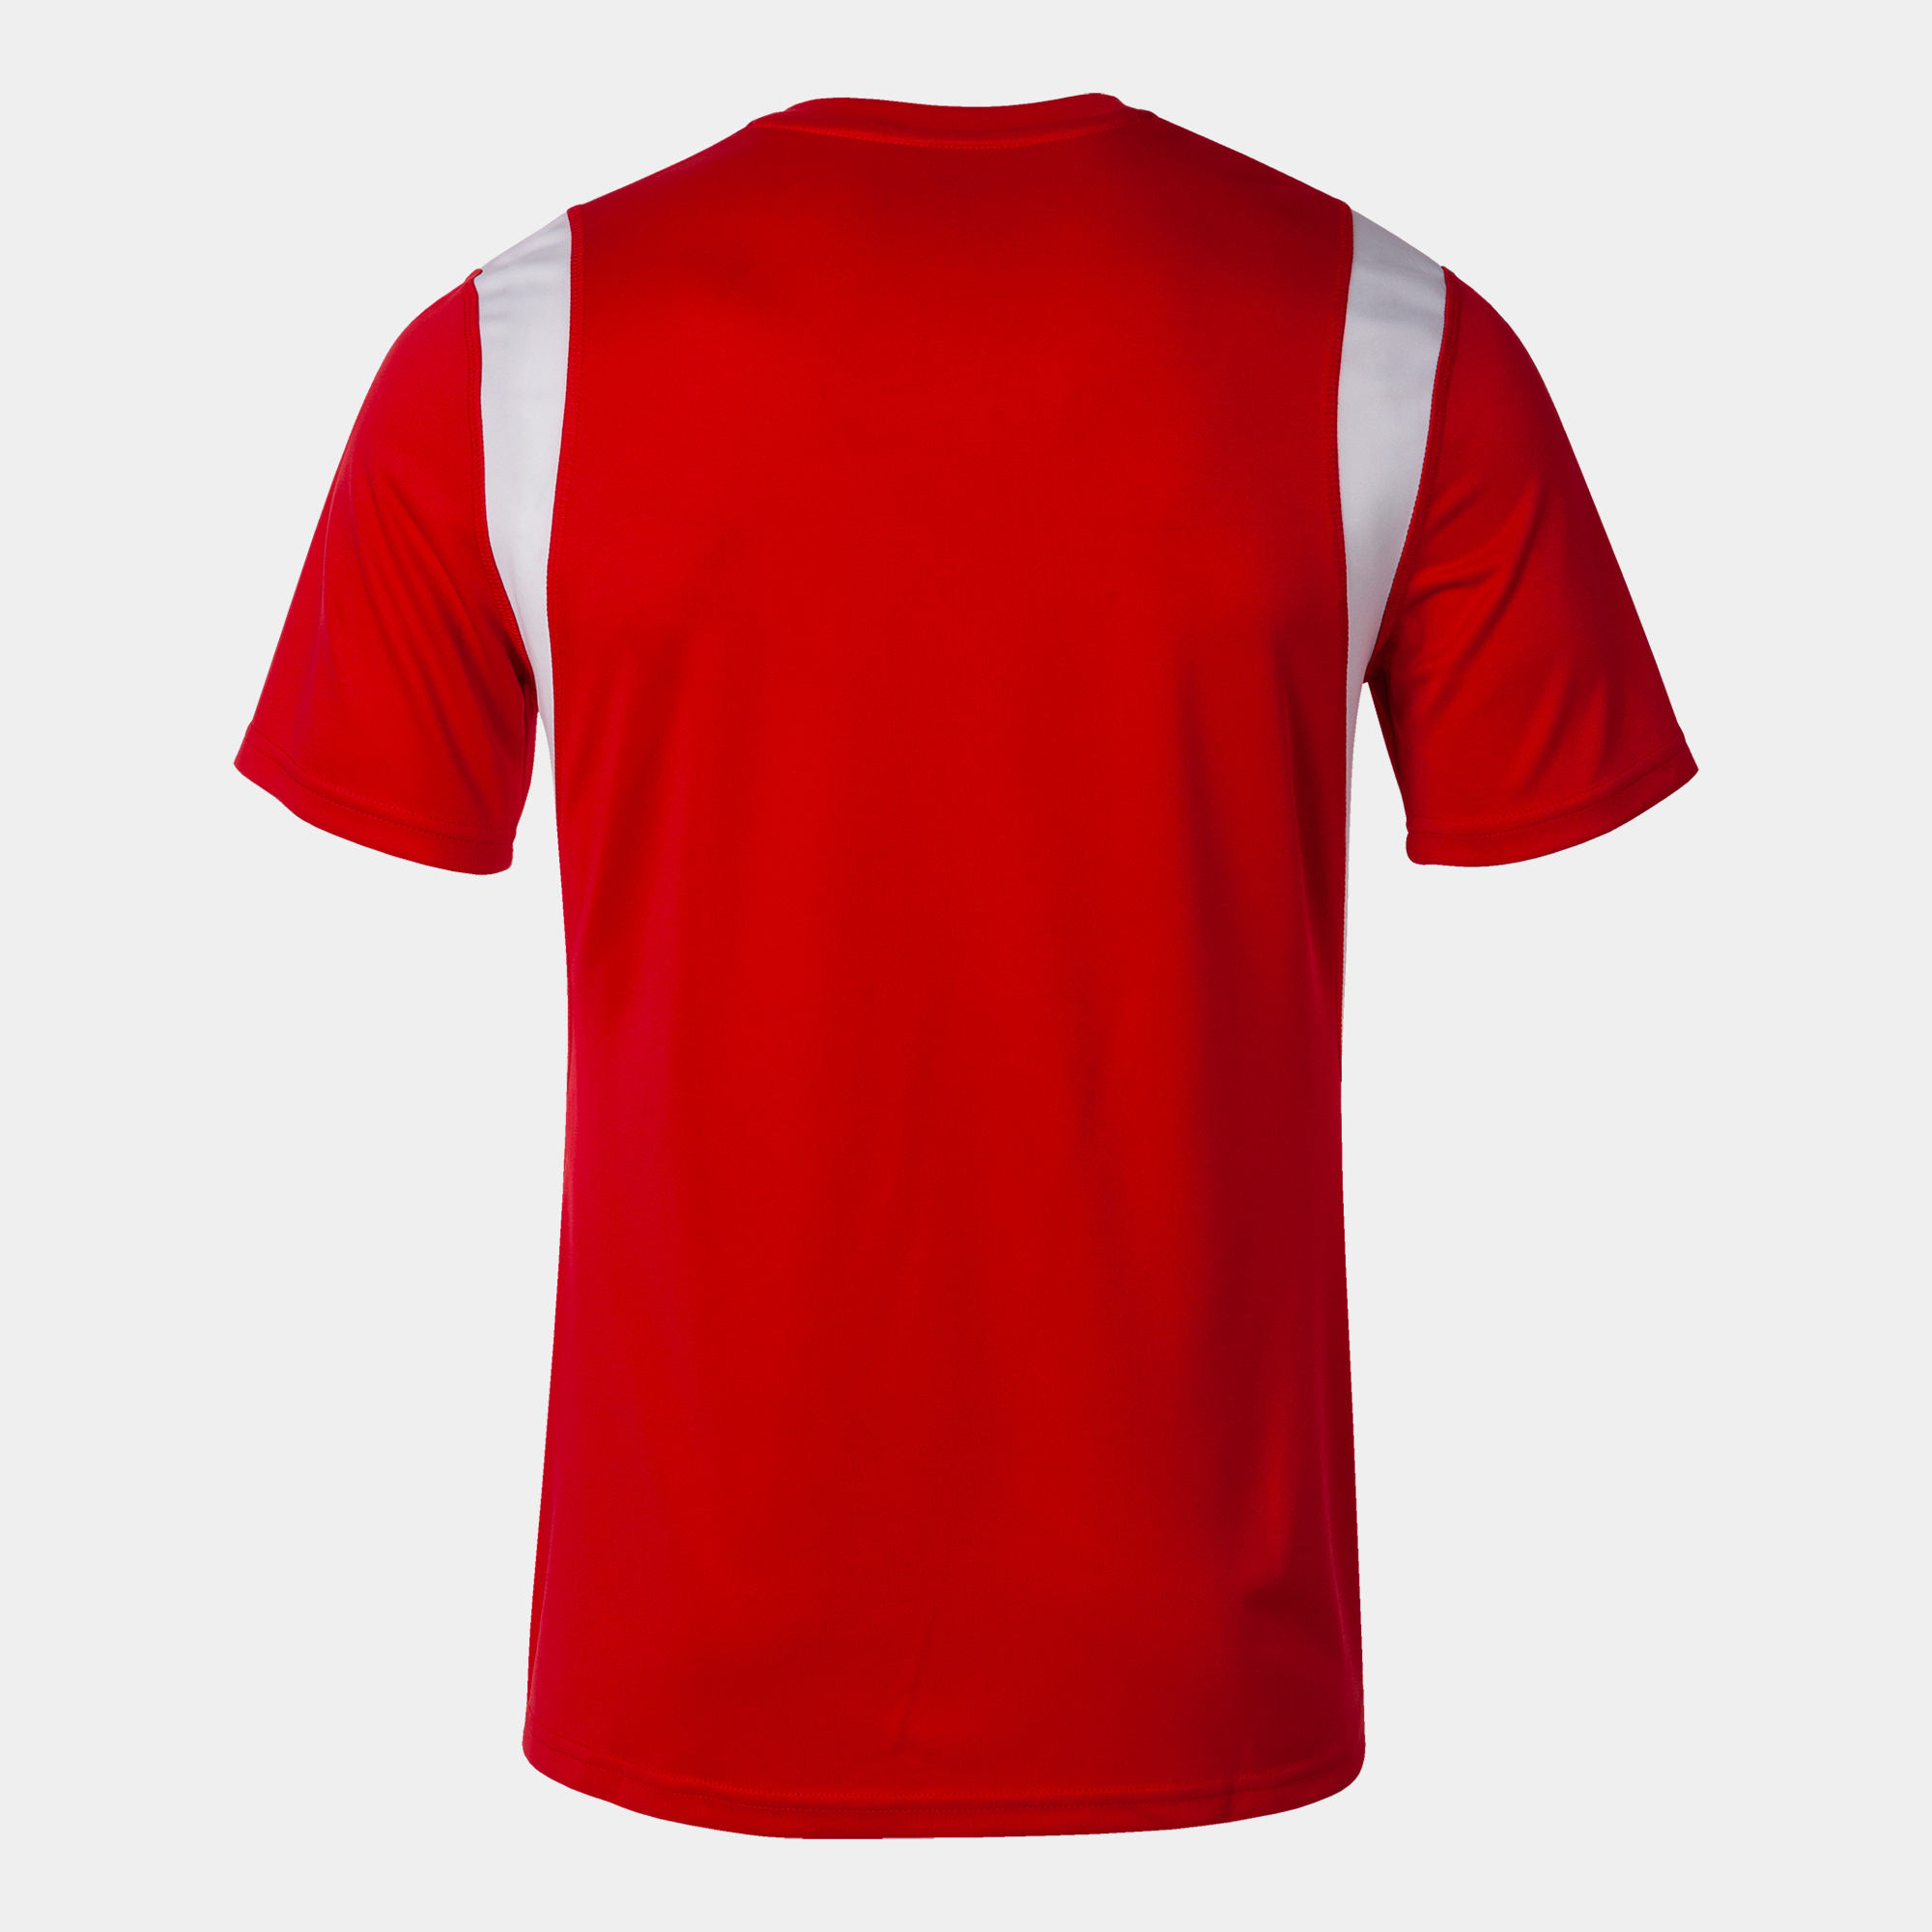 Camiseta Manga Corta Joma Dinamo Rojo